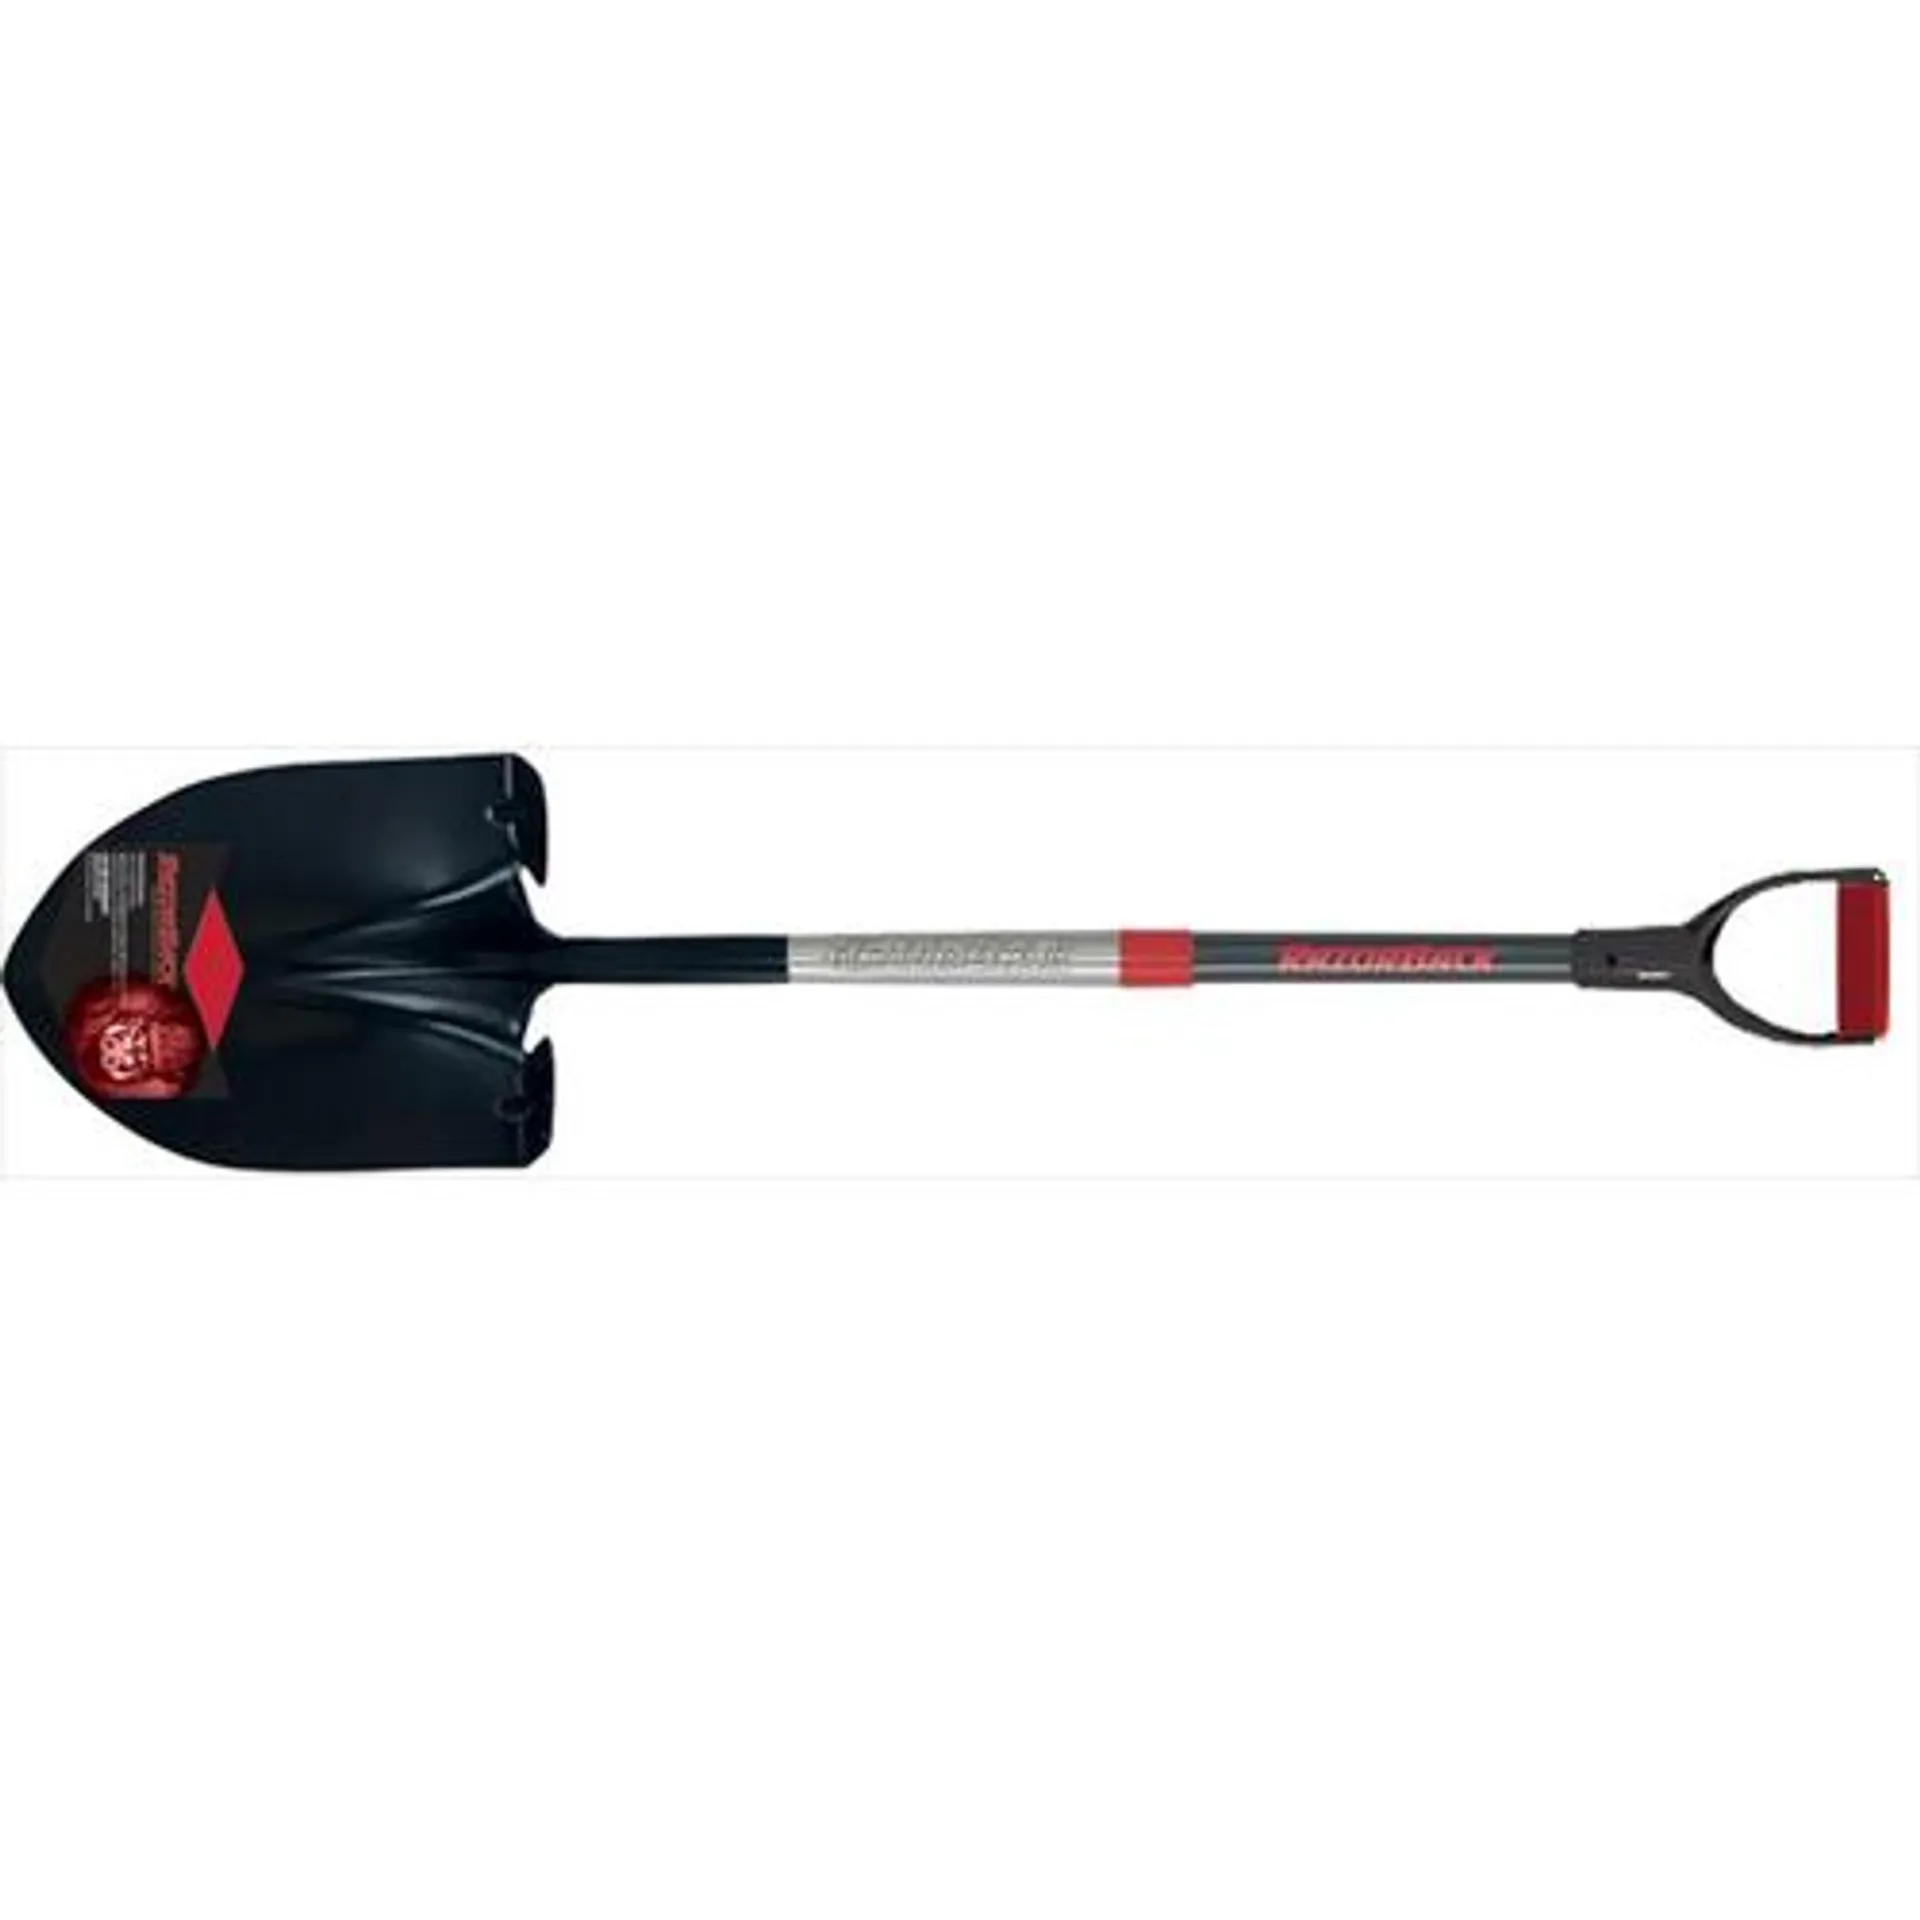 Razor-Back Round Point Shovel, SuperSocket W/ PowerStep, W/ Fiberglass Handle and Cushion D-Grip